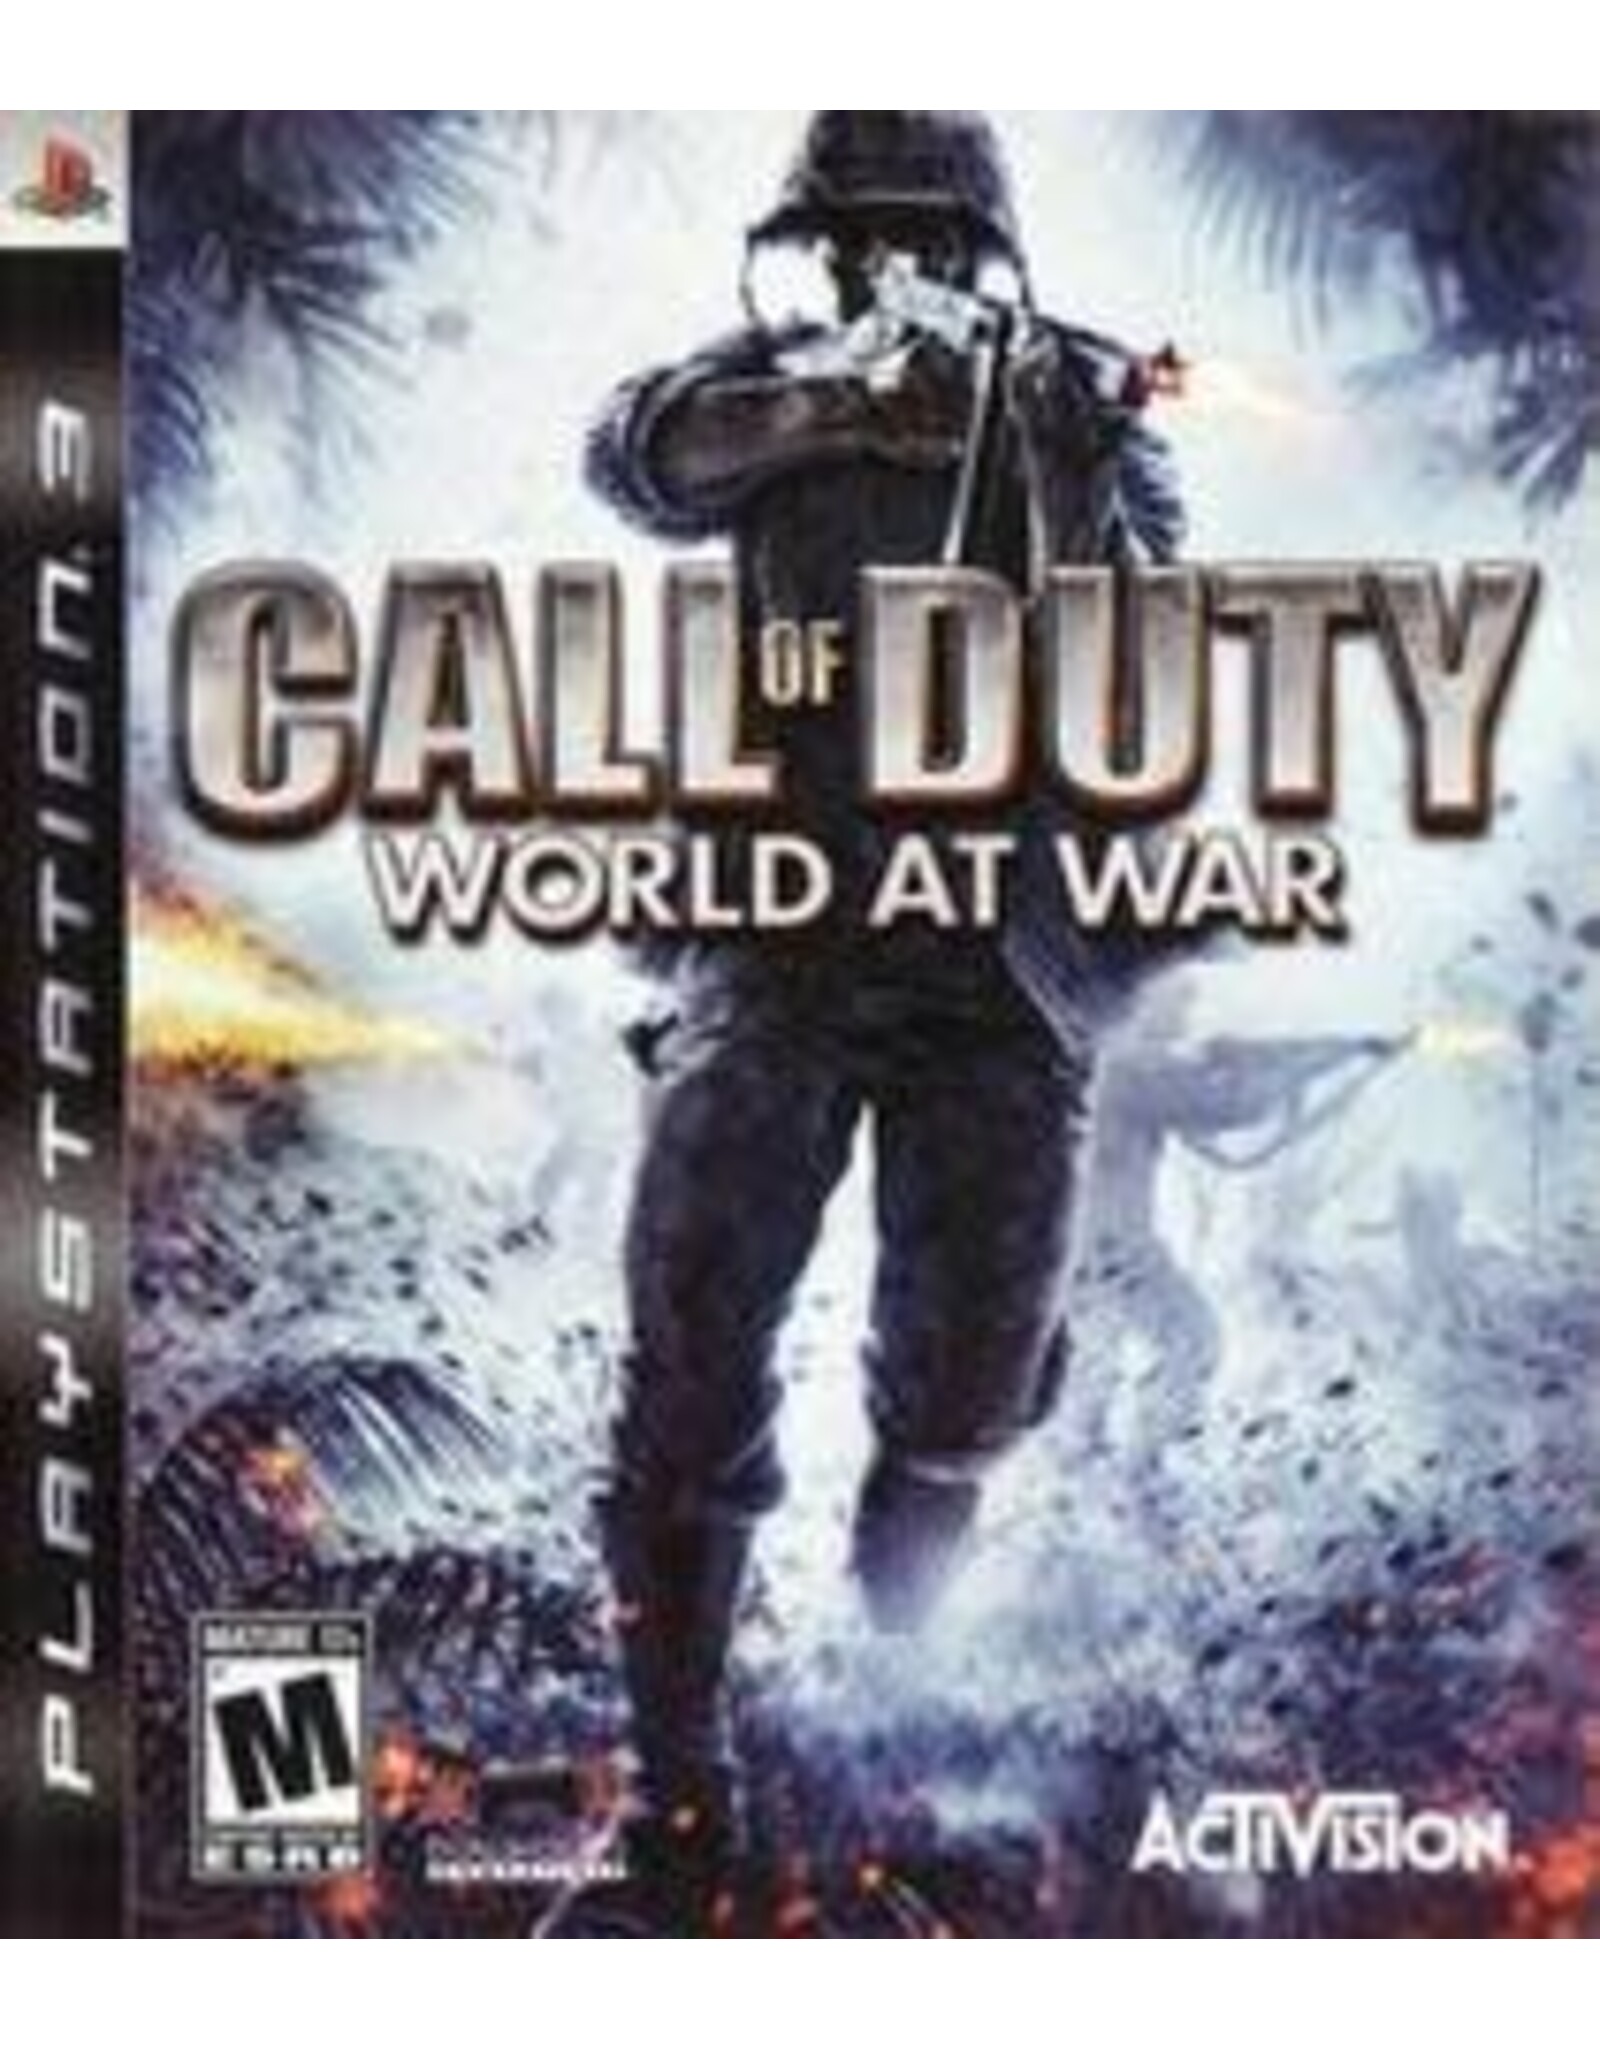 Playstation 3 Call of Duty World at War (Used)